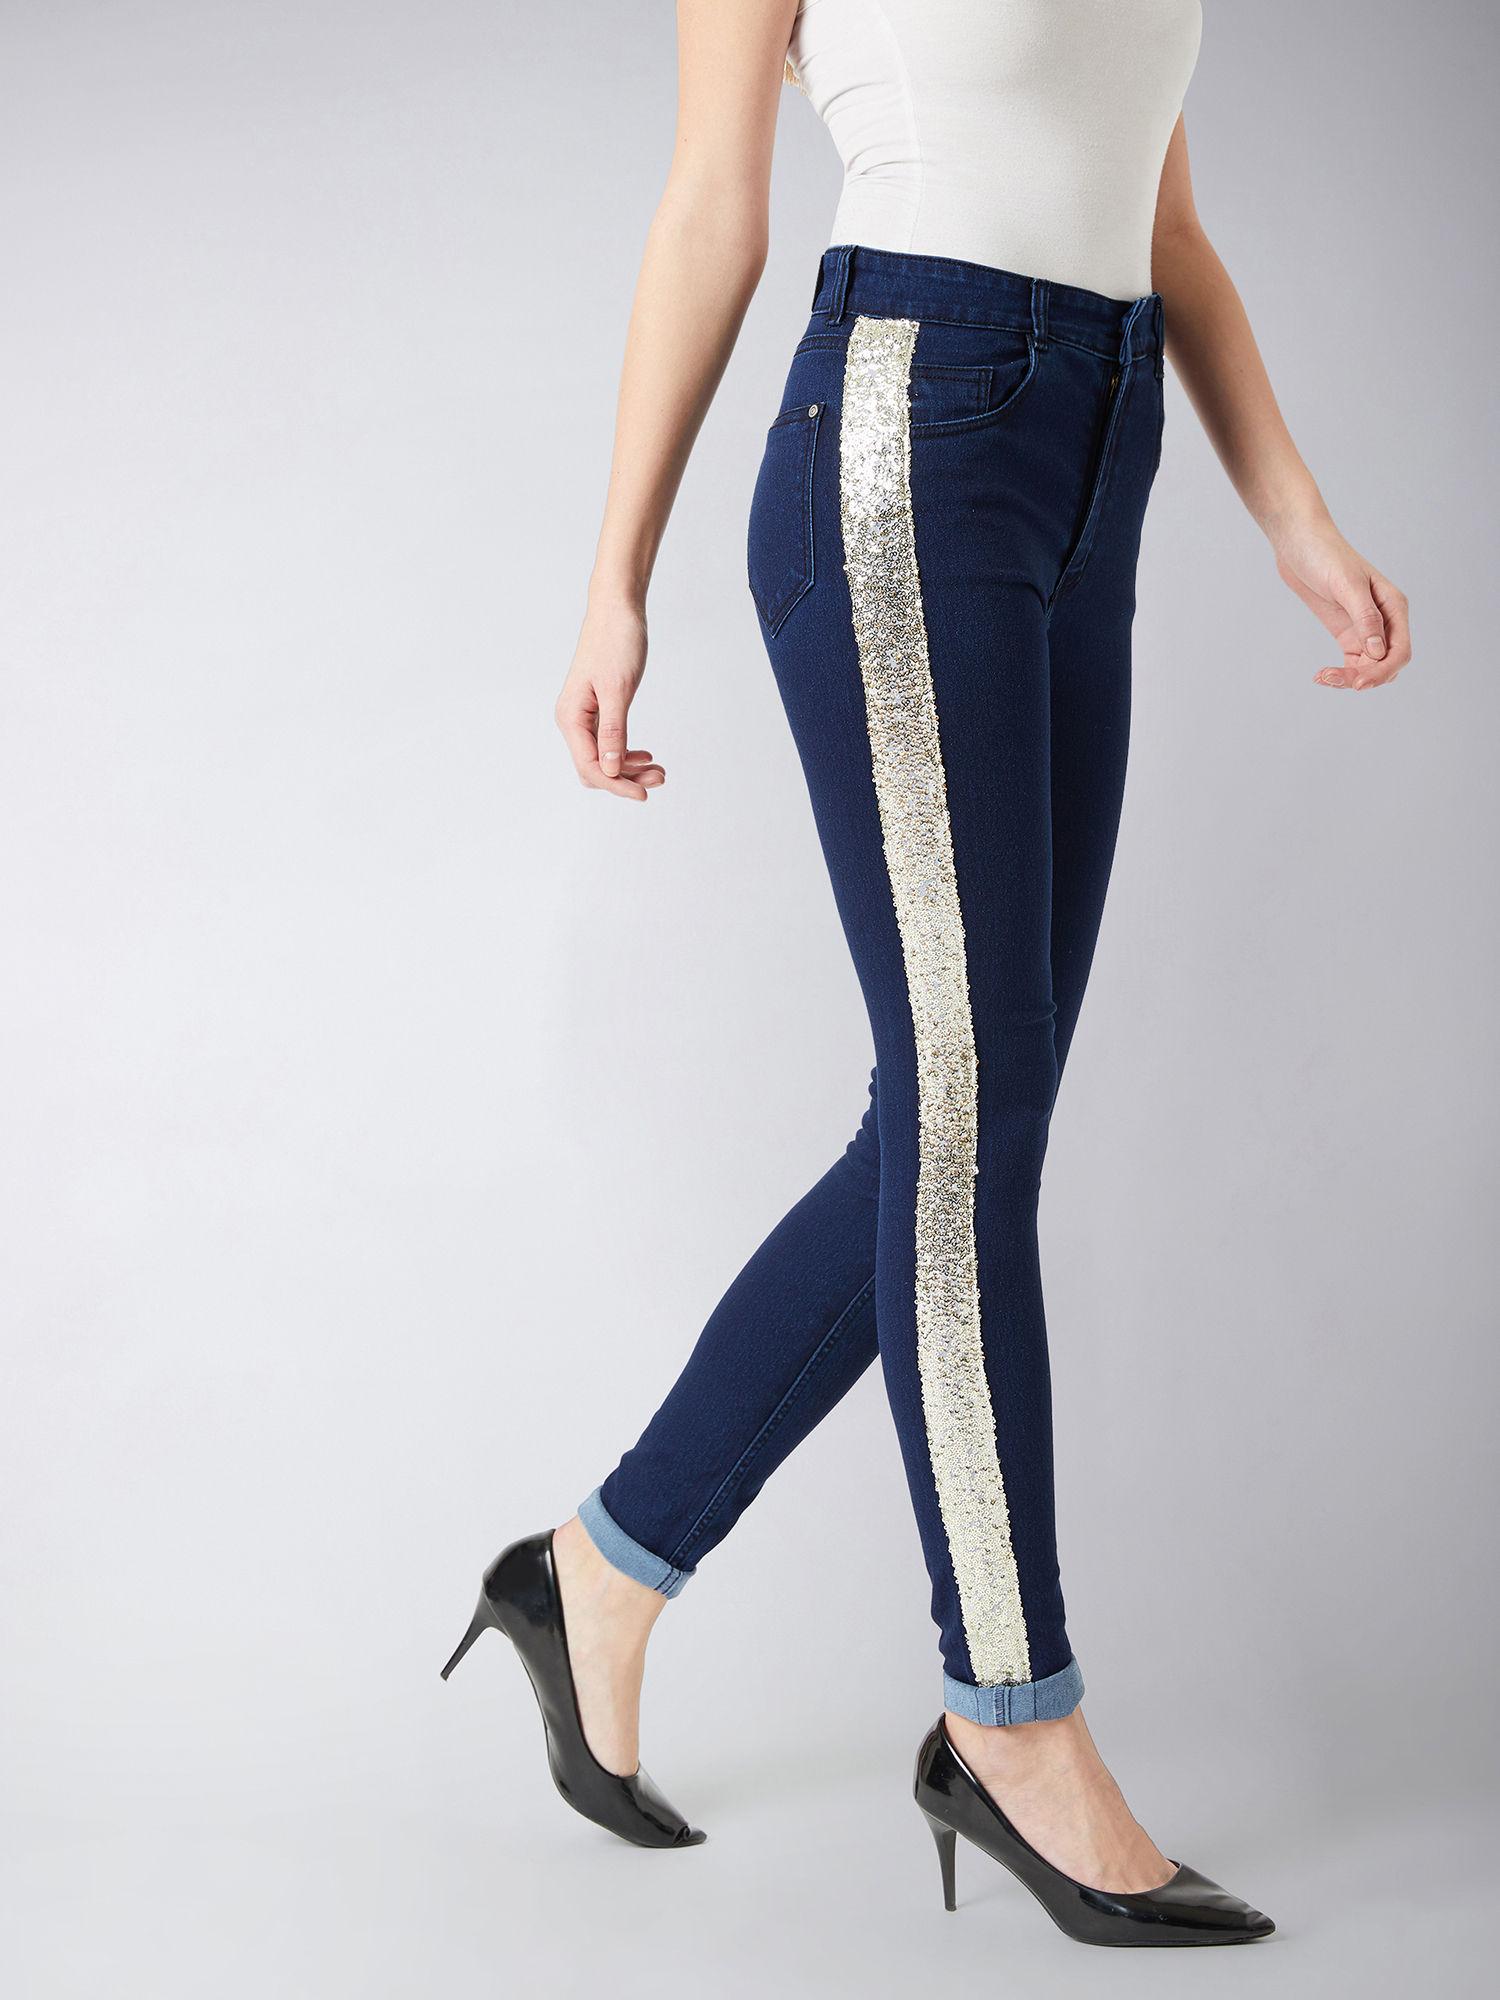 women's navy blue skinny mid rise clean look regular length denim jeans pant